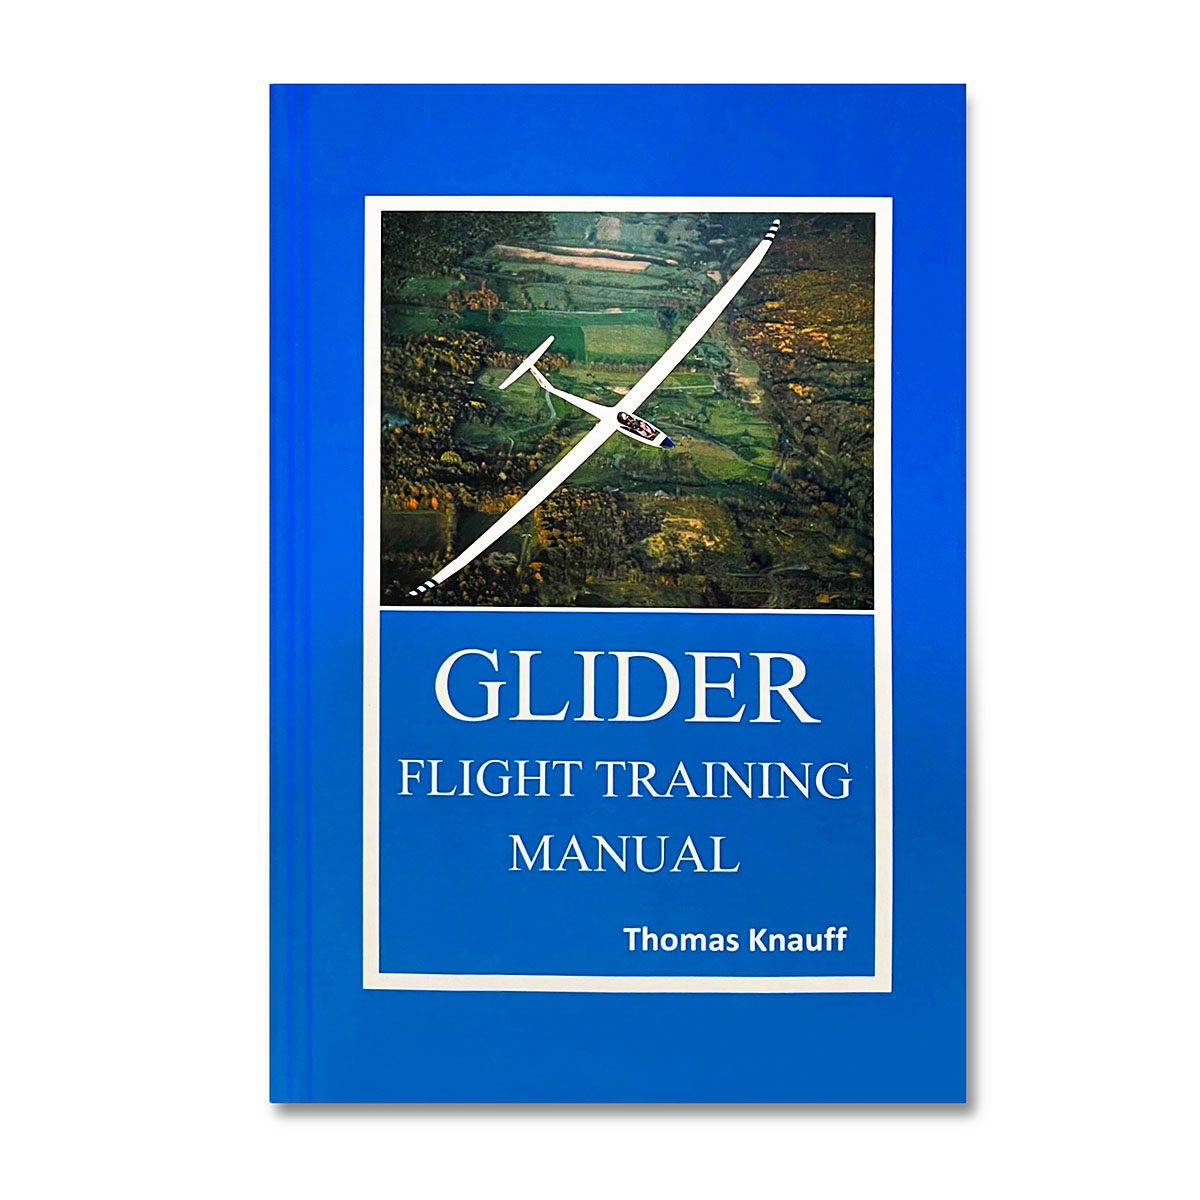 Glider Flight Taining Manual By Thomas Knauff